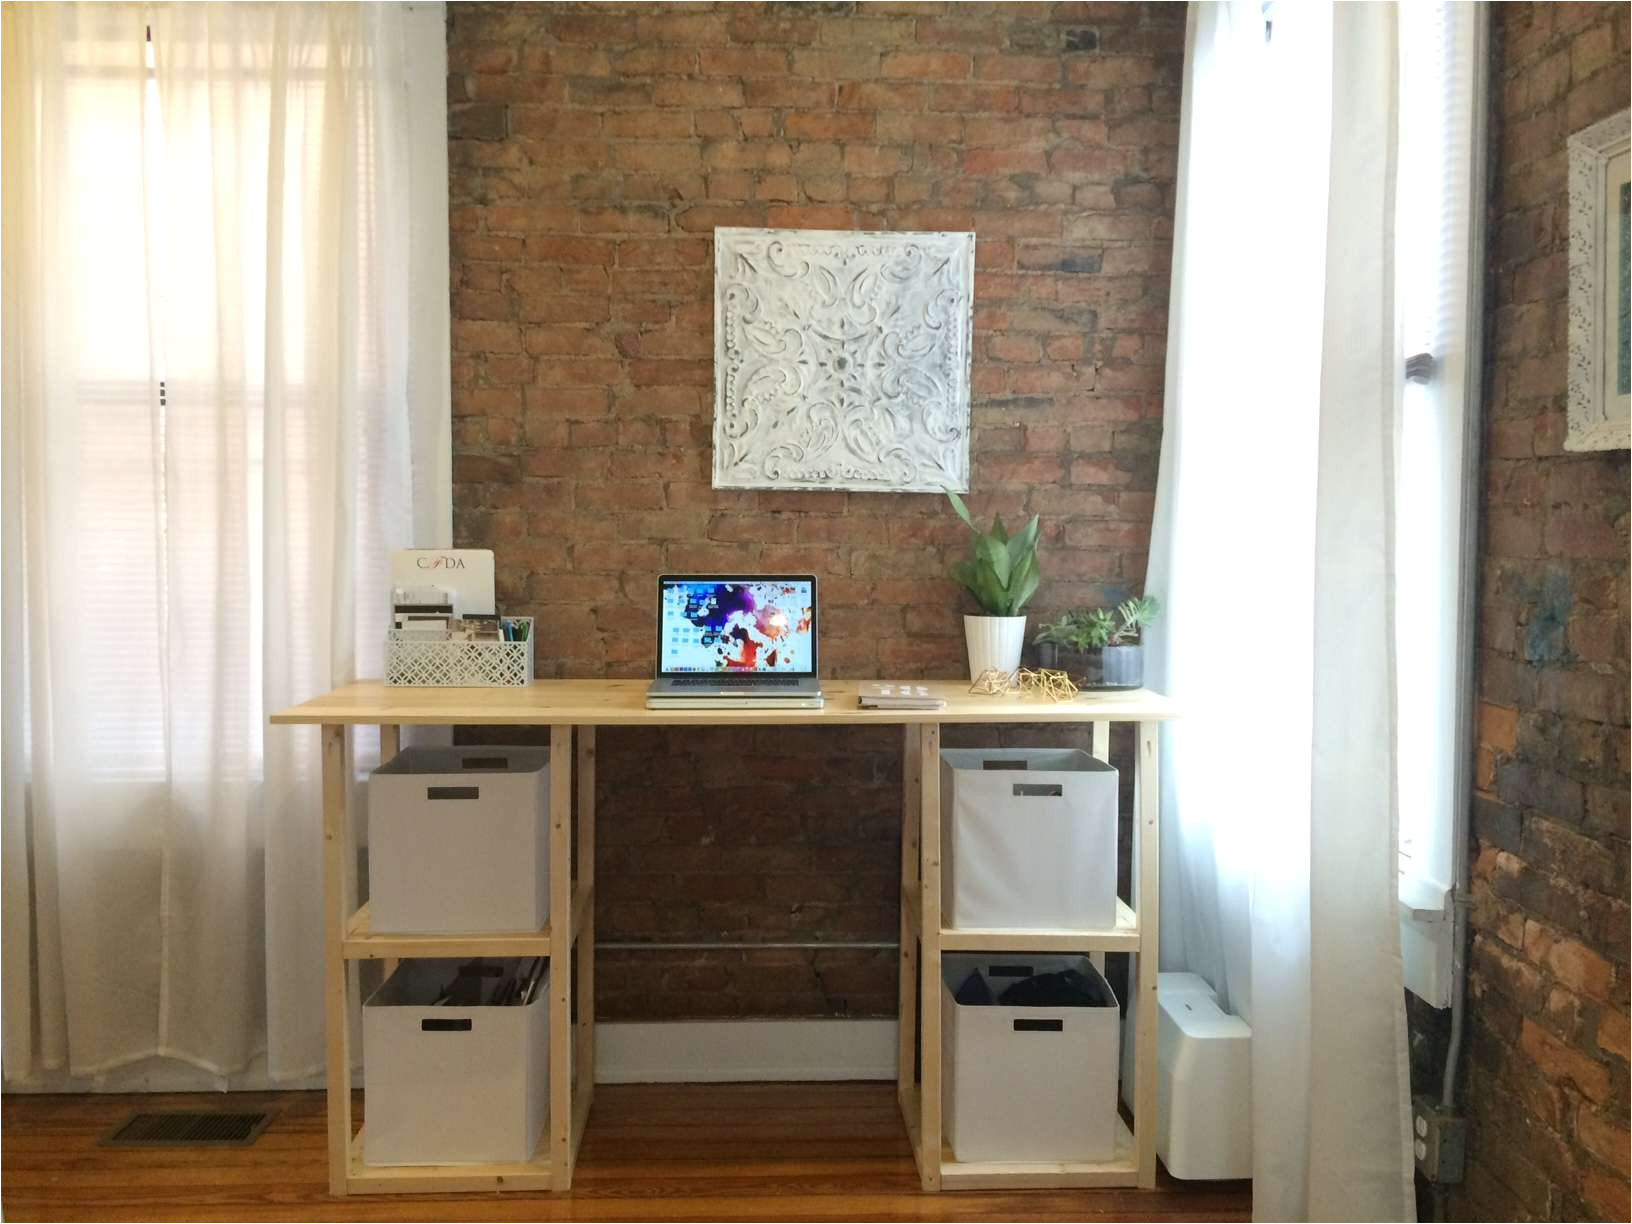 a diy desk by a brick wall and windows